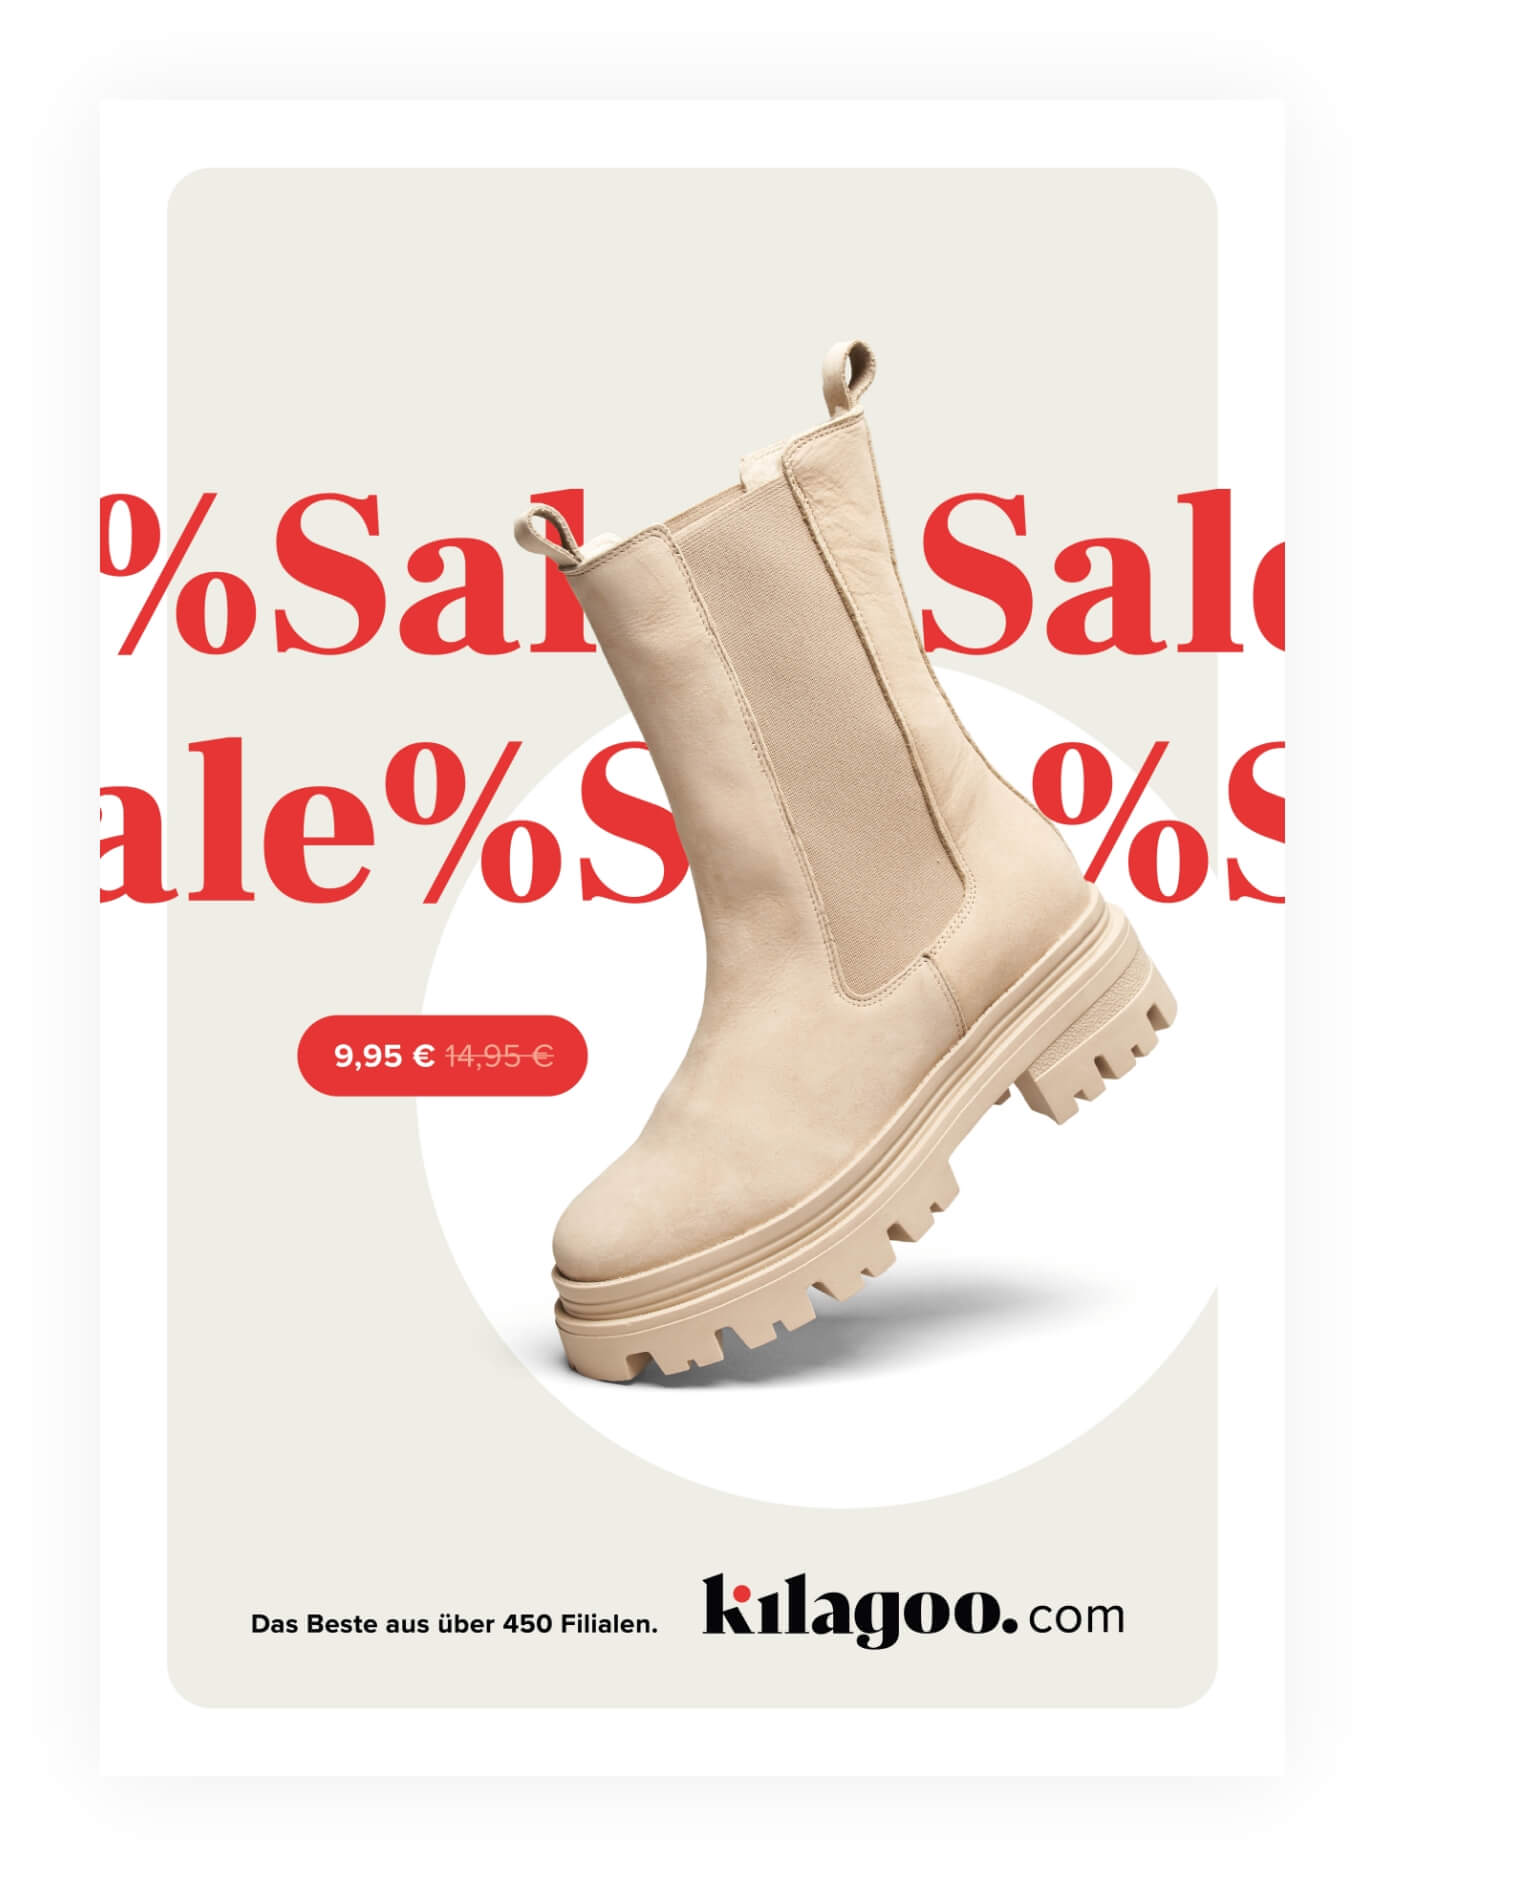 kilagoo - Campaigning Sale